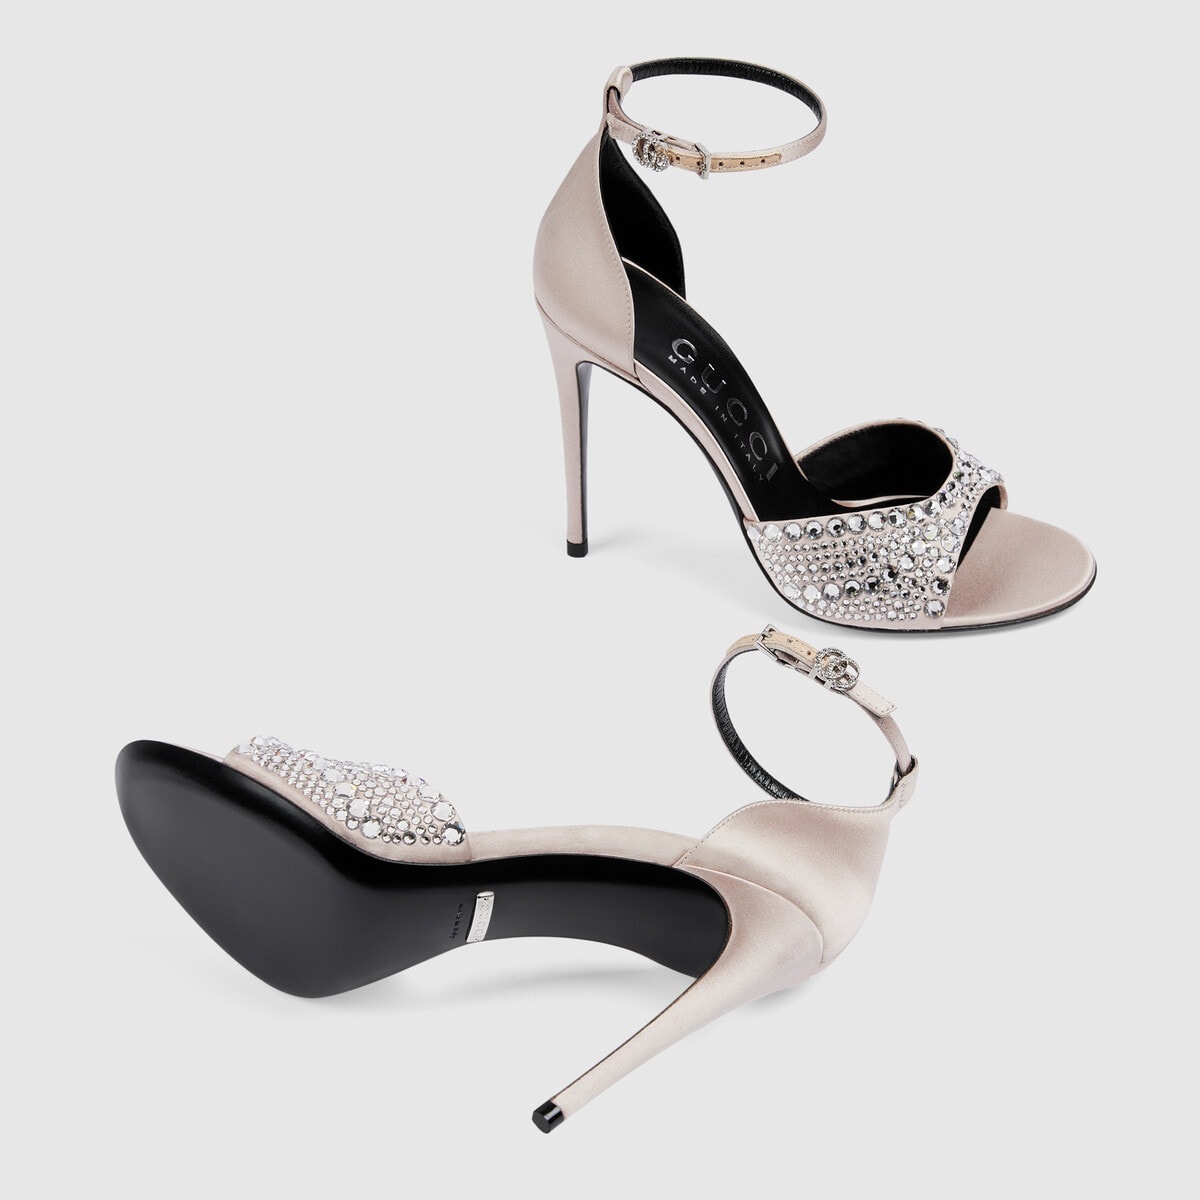 Women's high heel sandals with crystals - 6